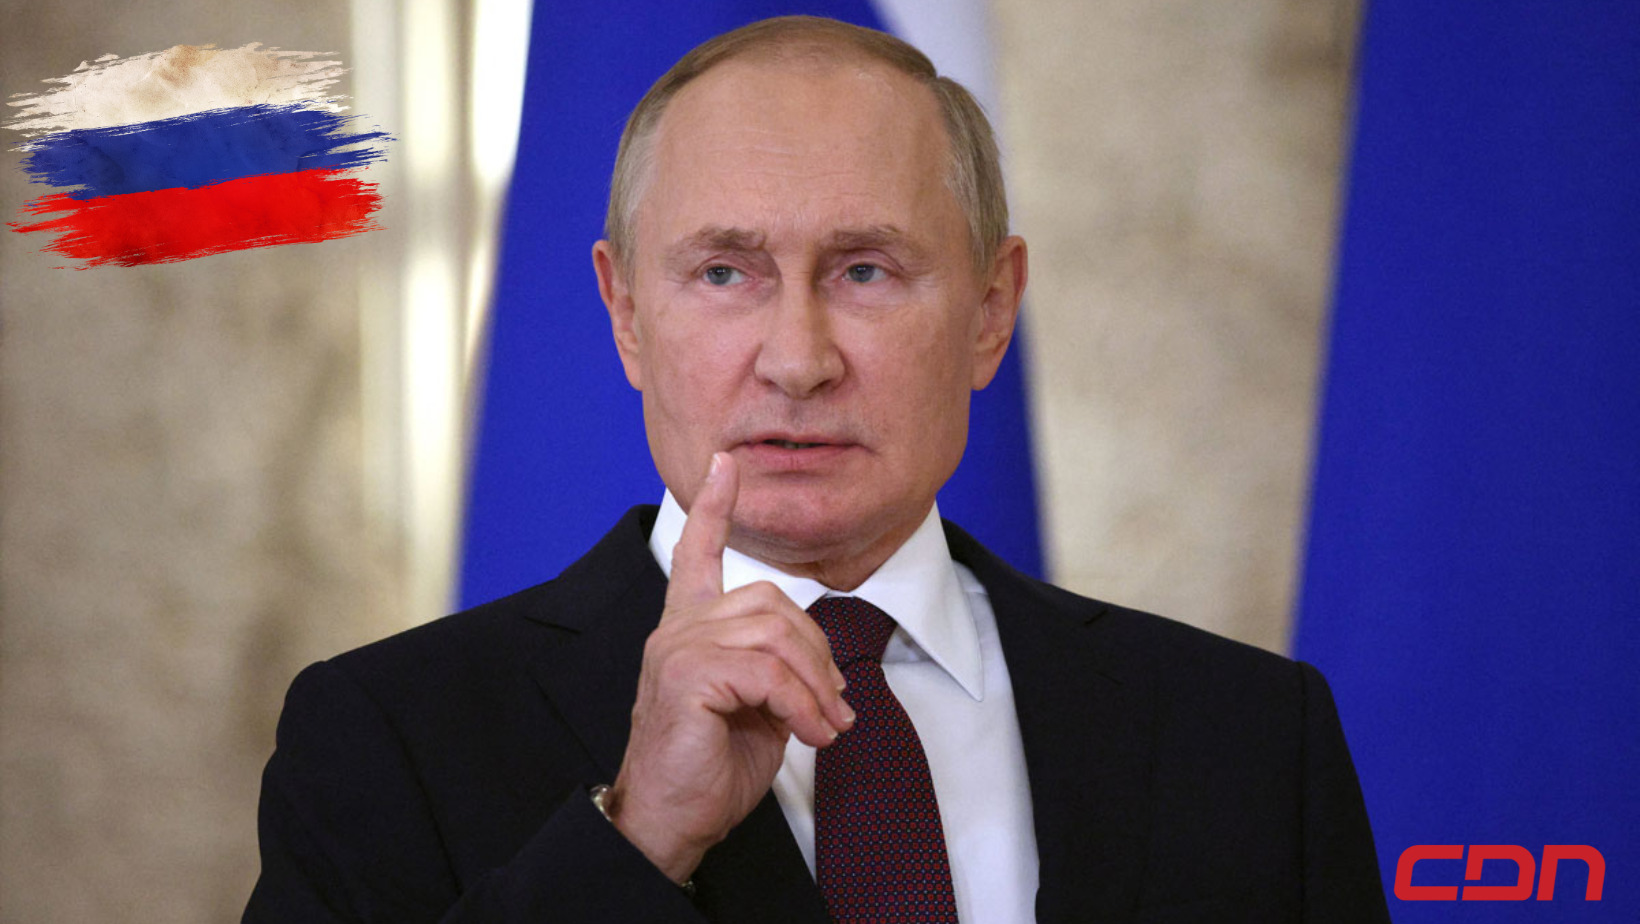 El presidente ruso, Vladimir Putin. Foto: CDN Digital